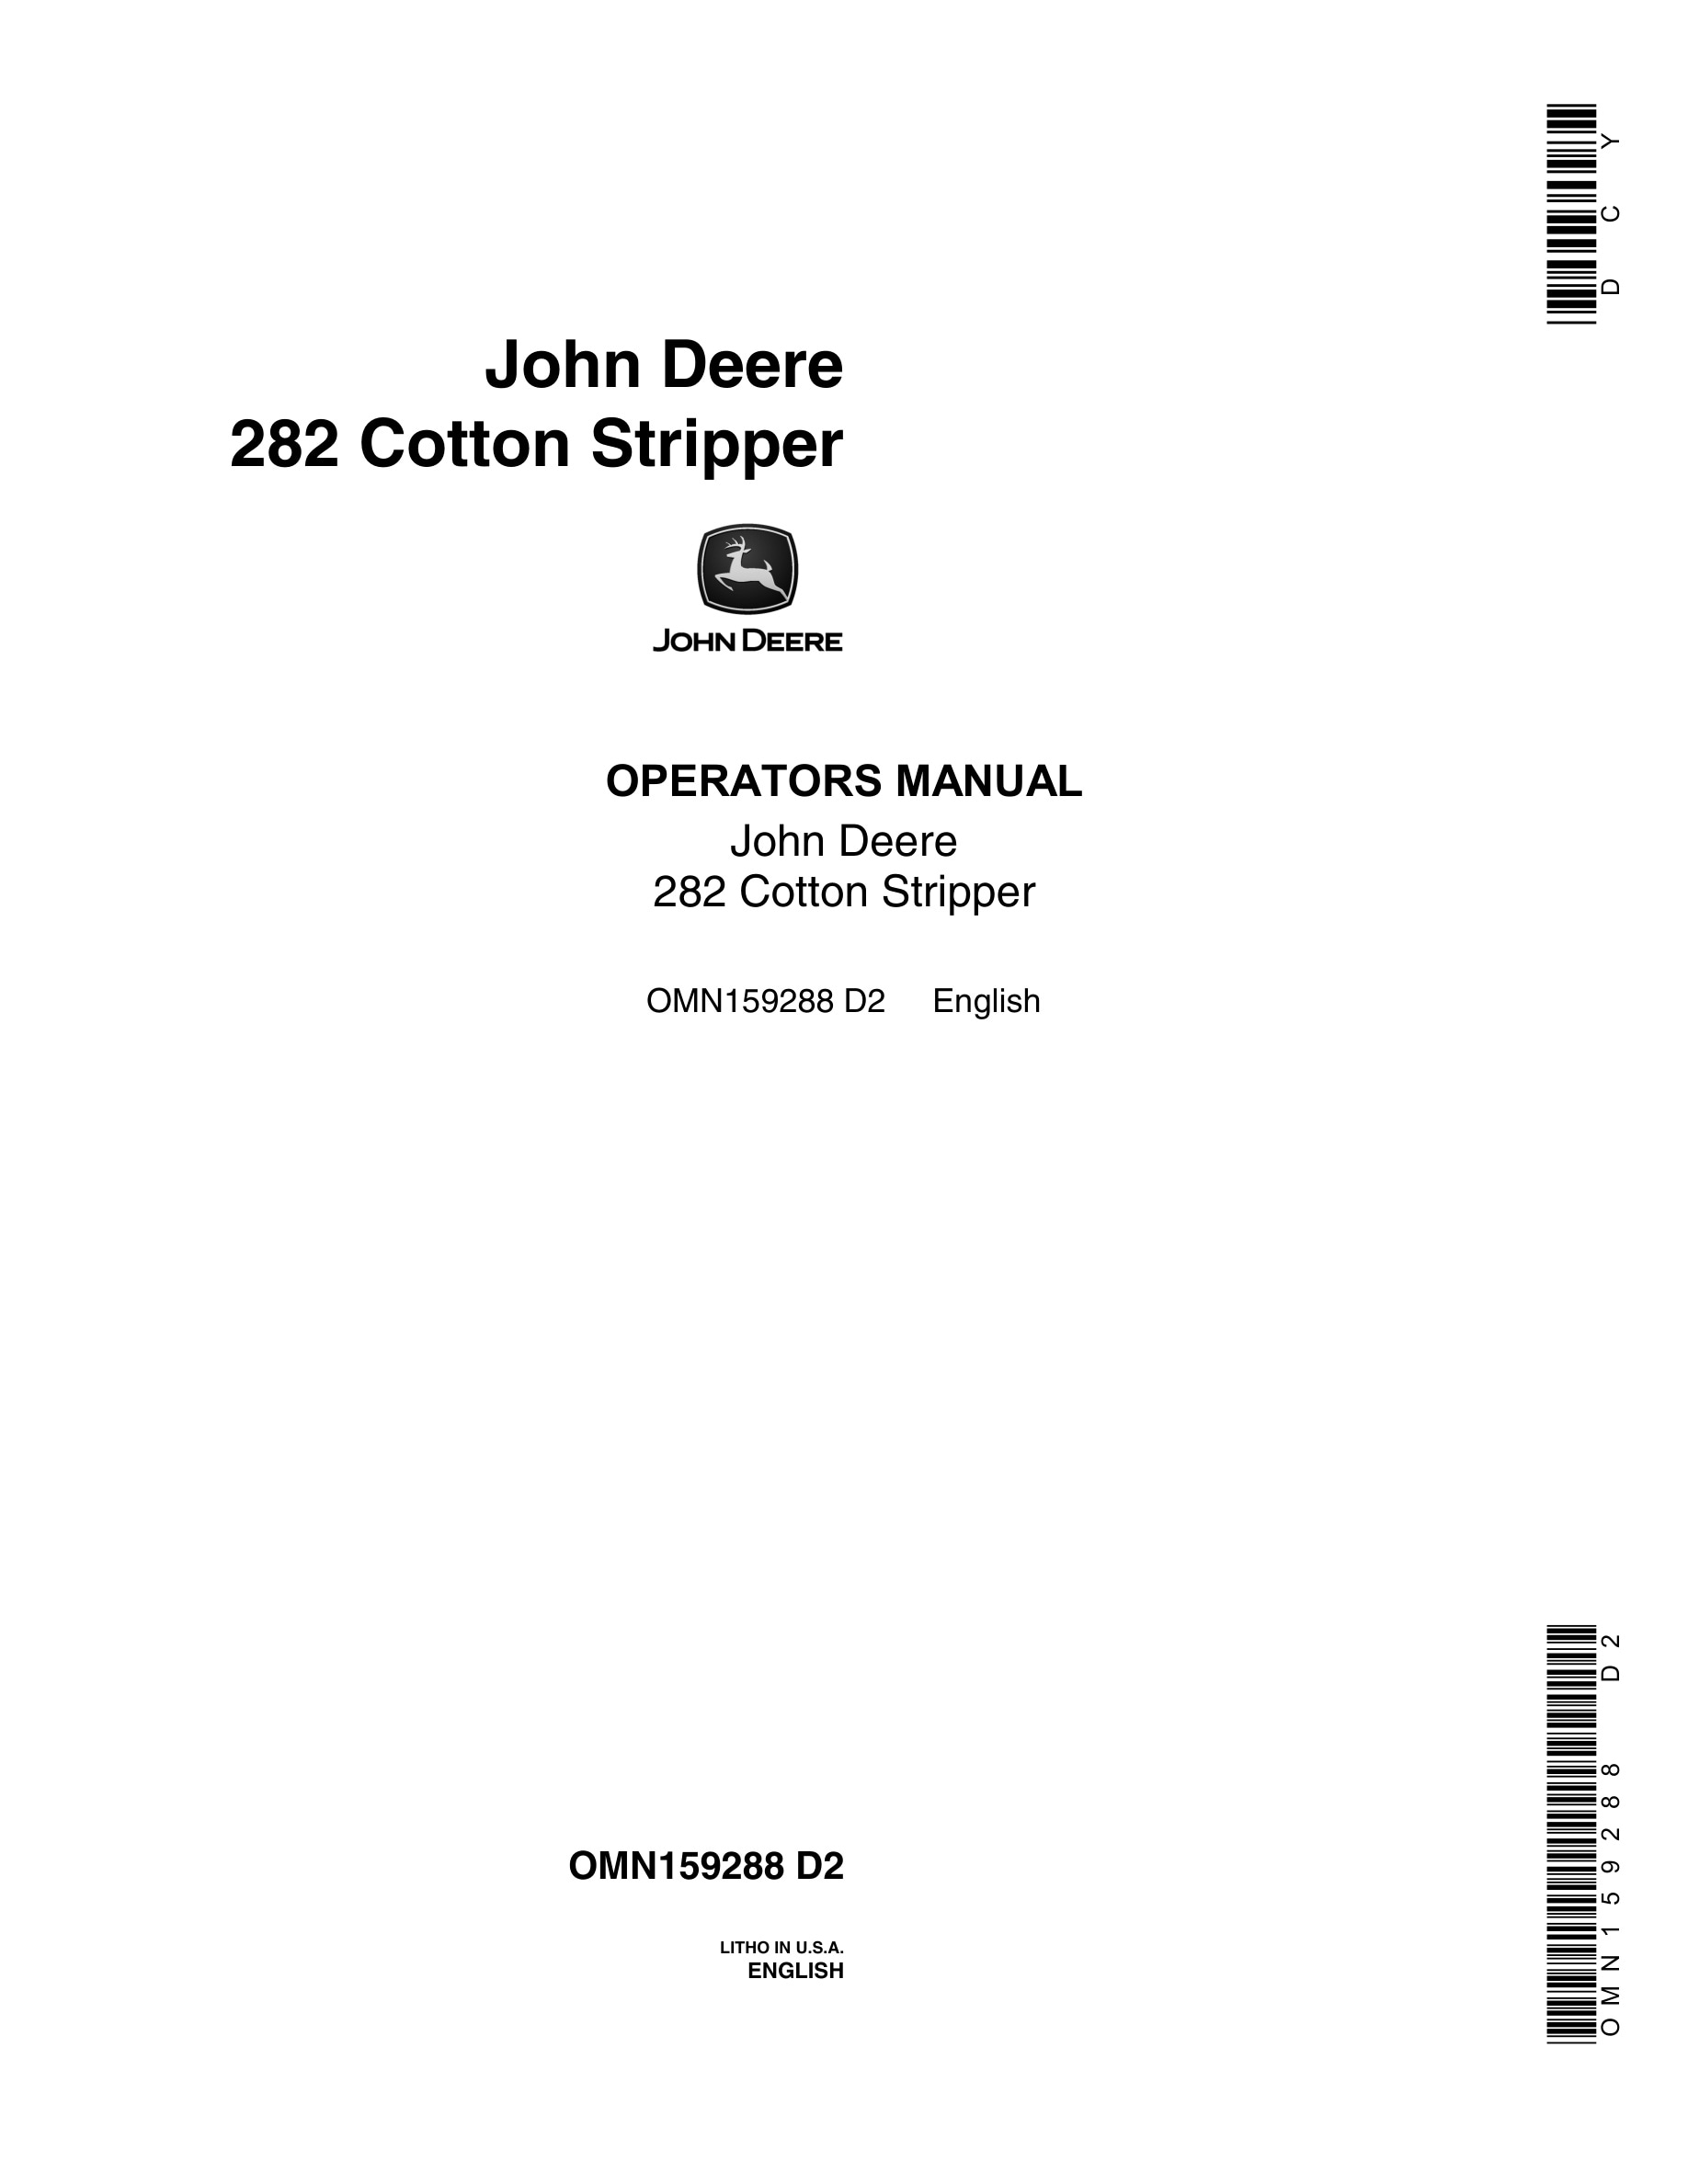 John Deere 282 Cotton Sripper Operator Manual OMN159288-1